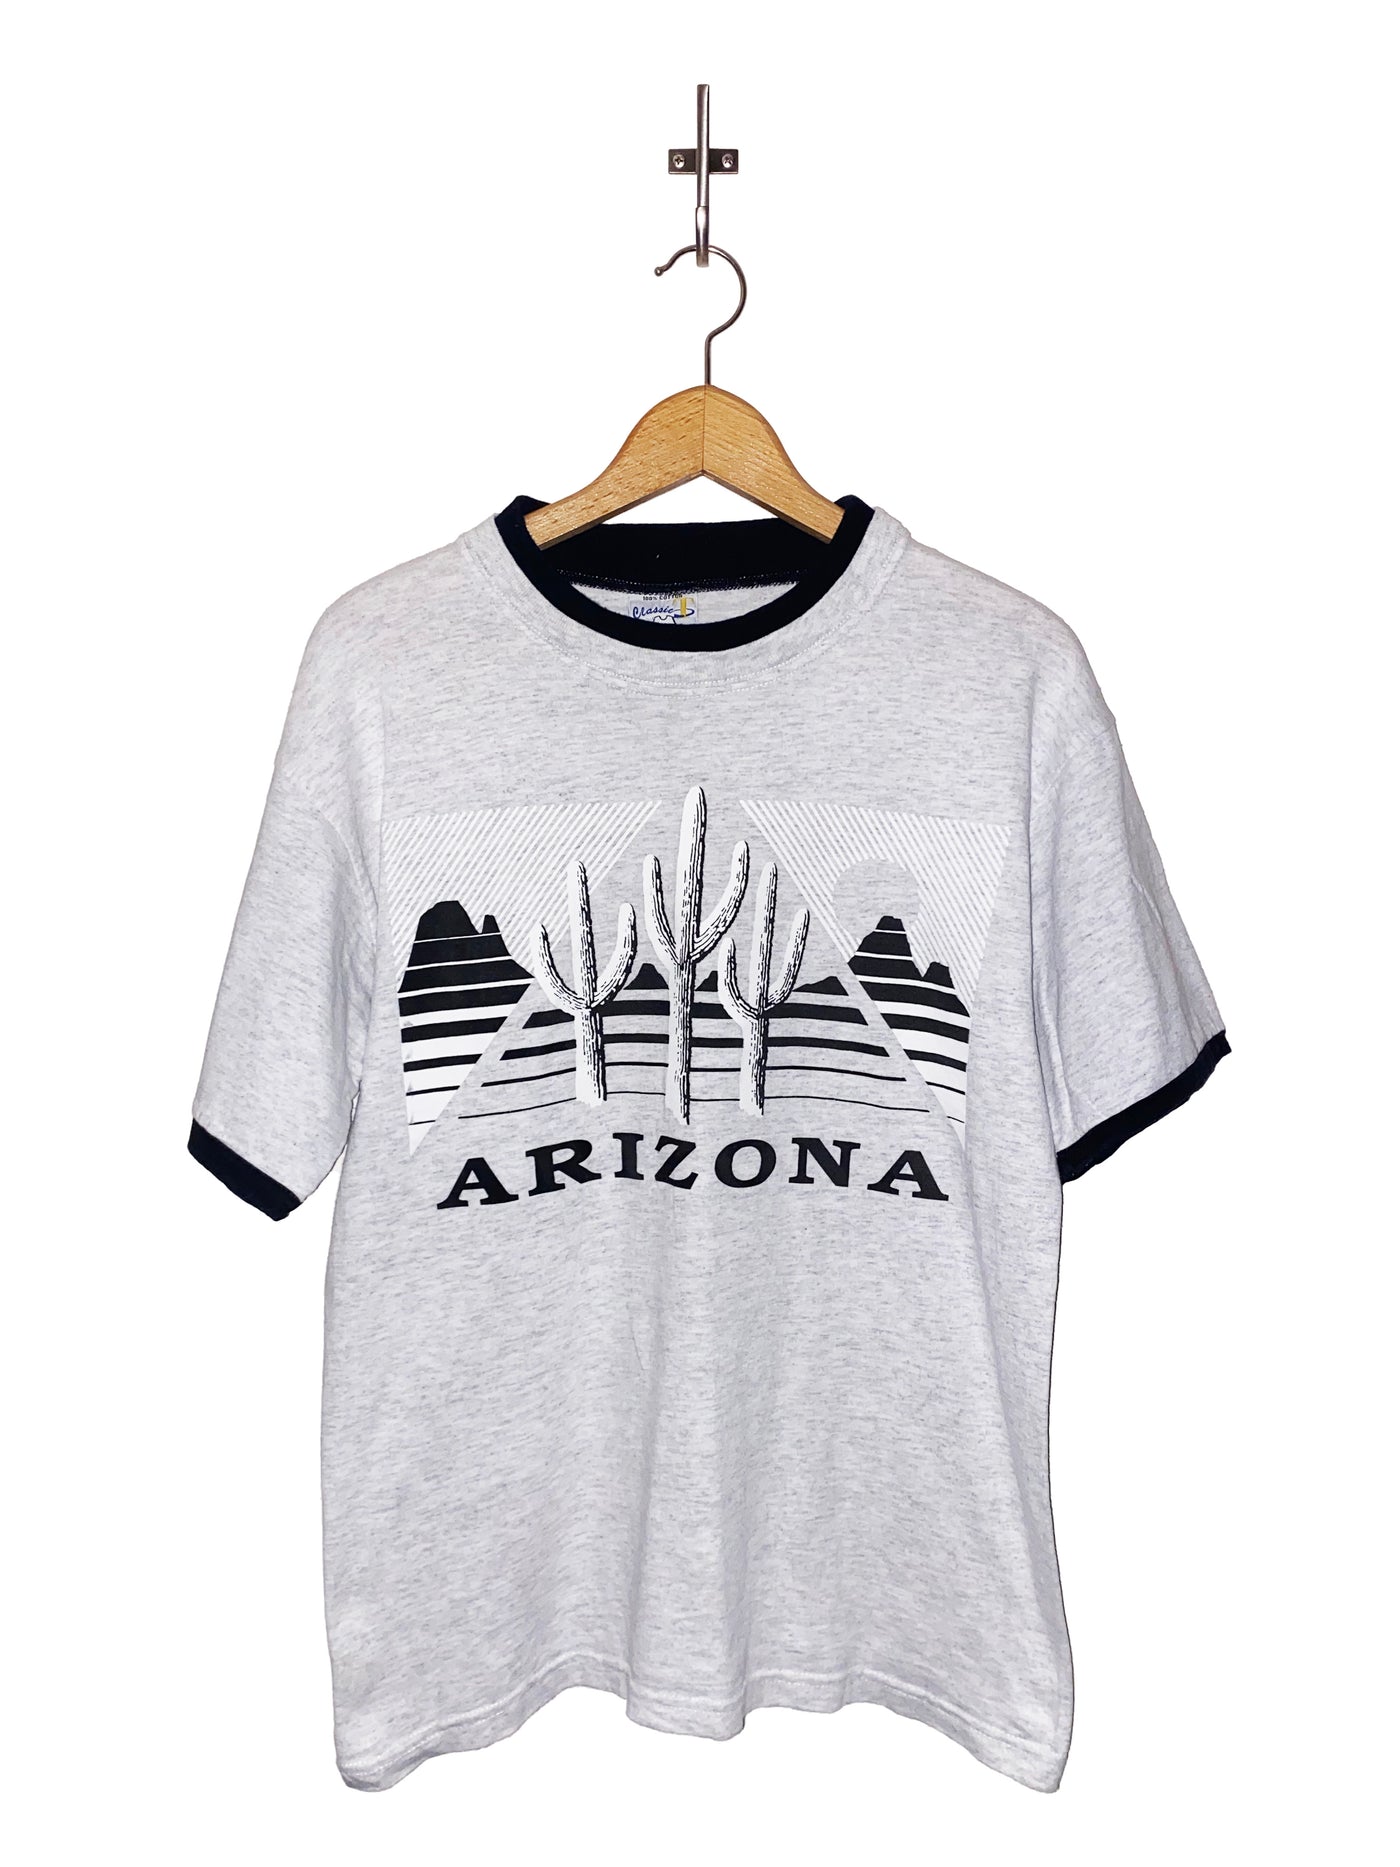 Vintage 80s Arizona T-Shirt